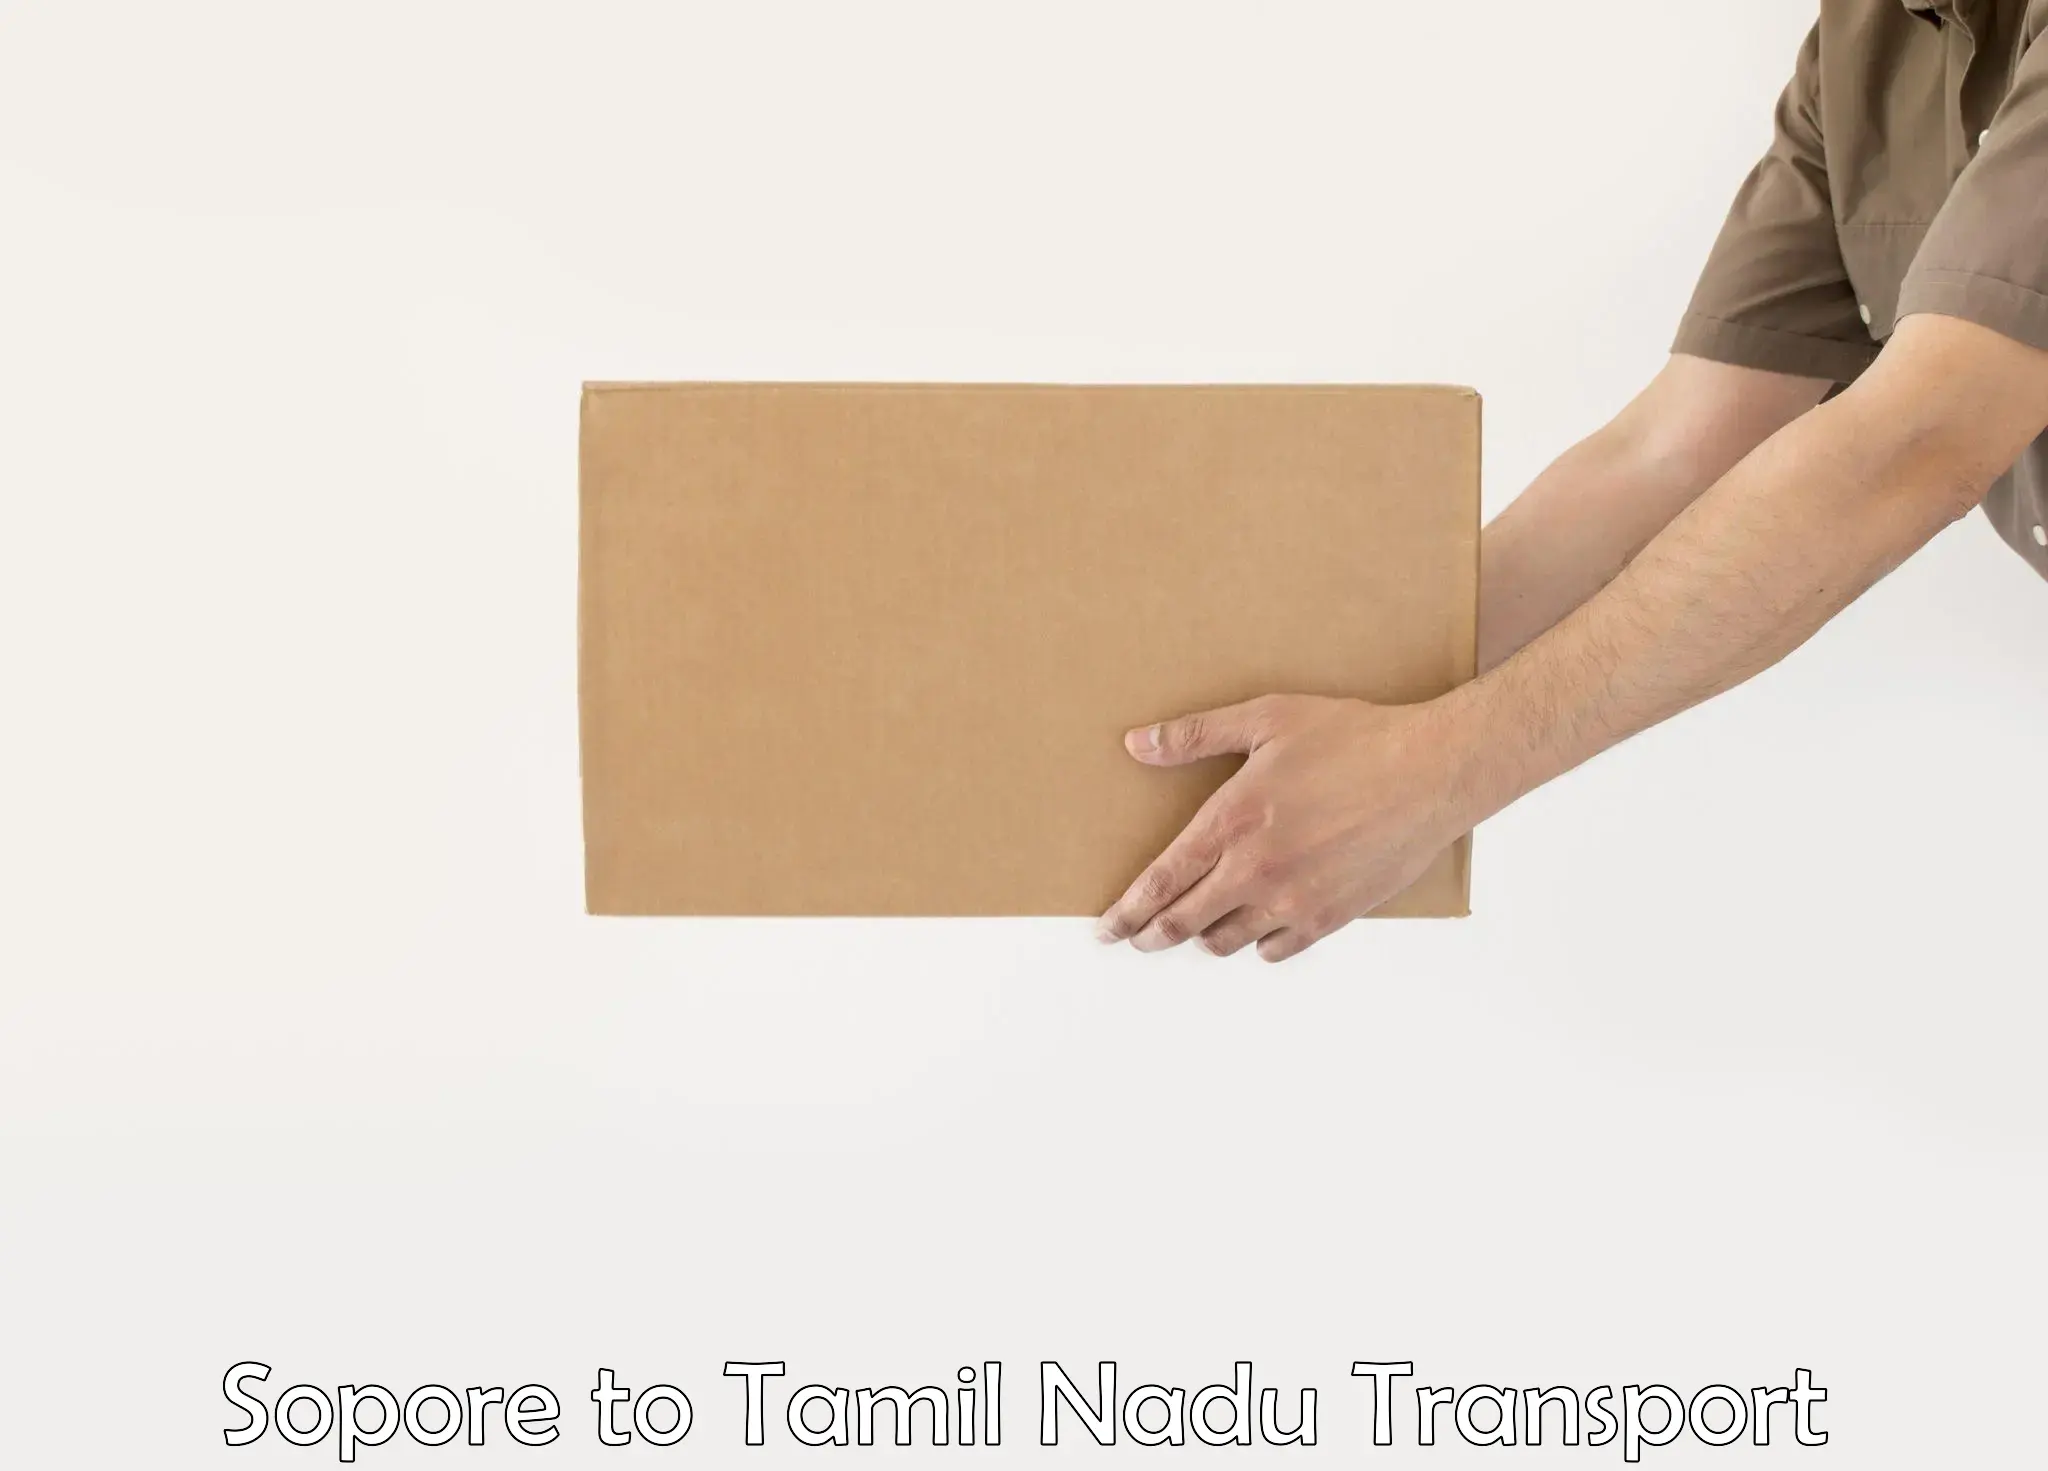 Bike transport service Sopore to Tamil Nadu